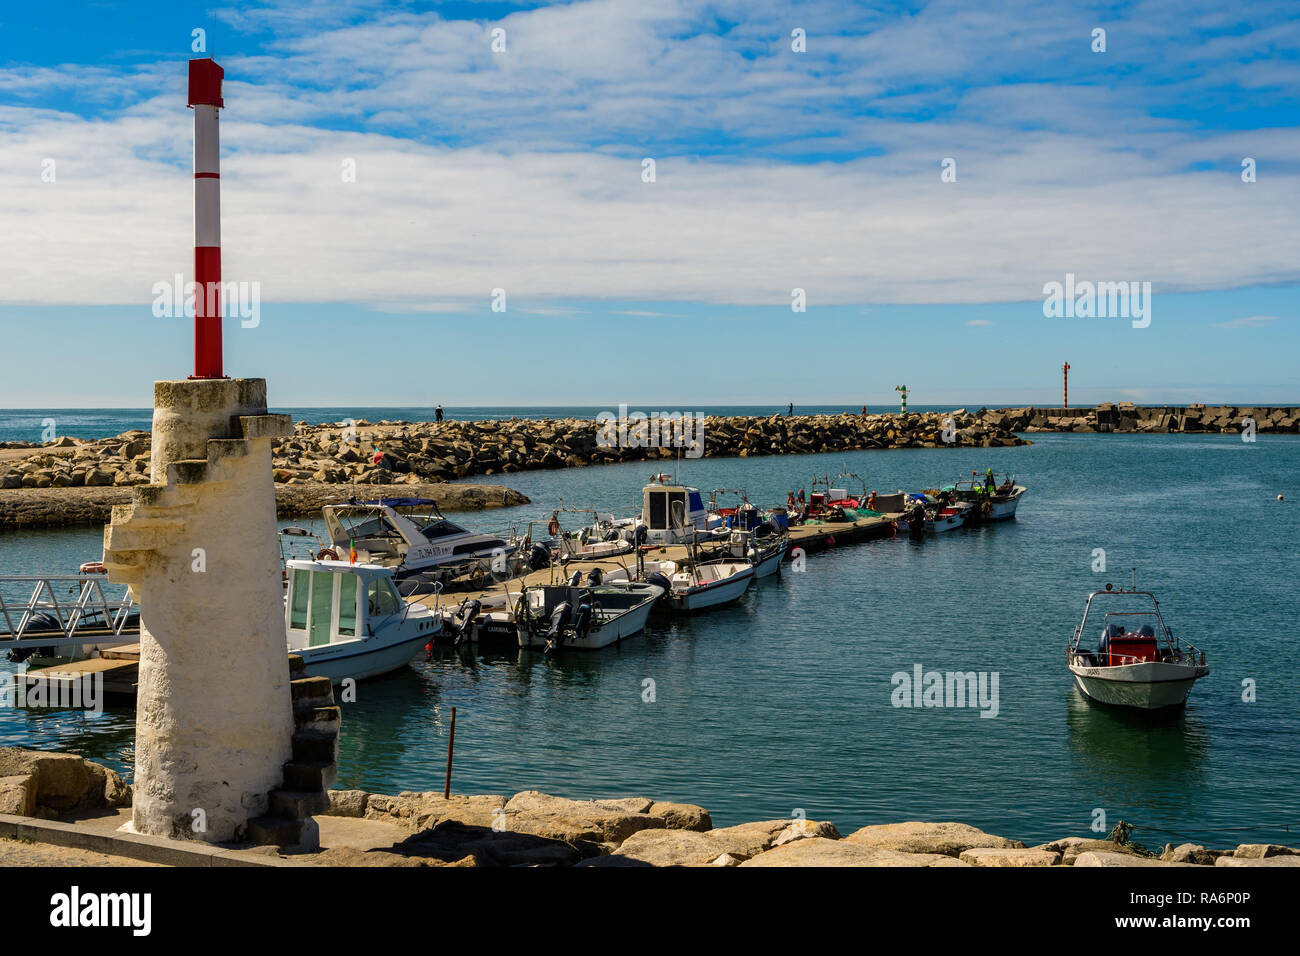 Vila Praia de Ancora, Portugal - 17. September 2017: Pier und der Stadt, Vila Praia de Ancora, Portugal Stockfoto